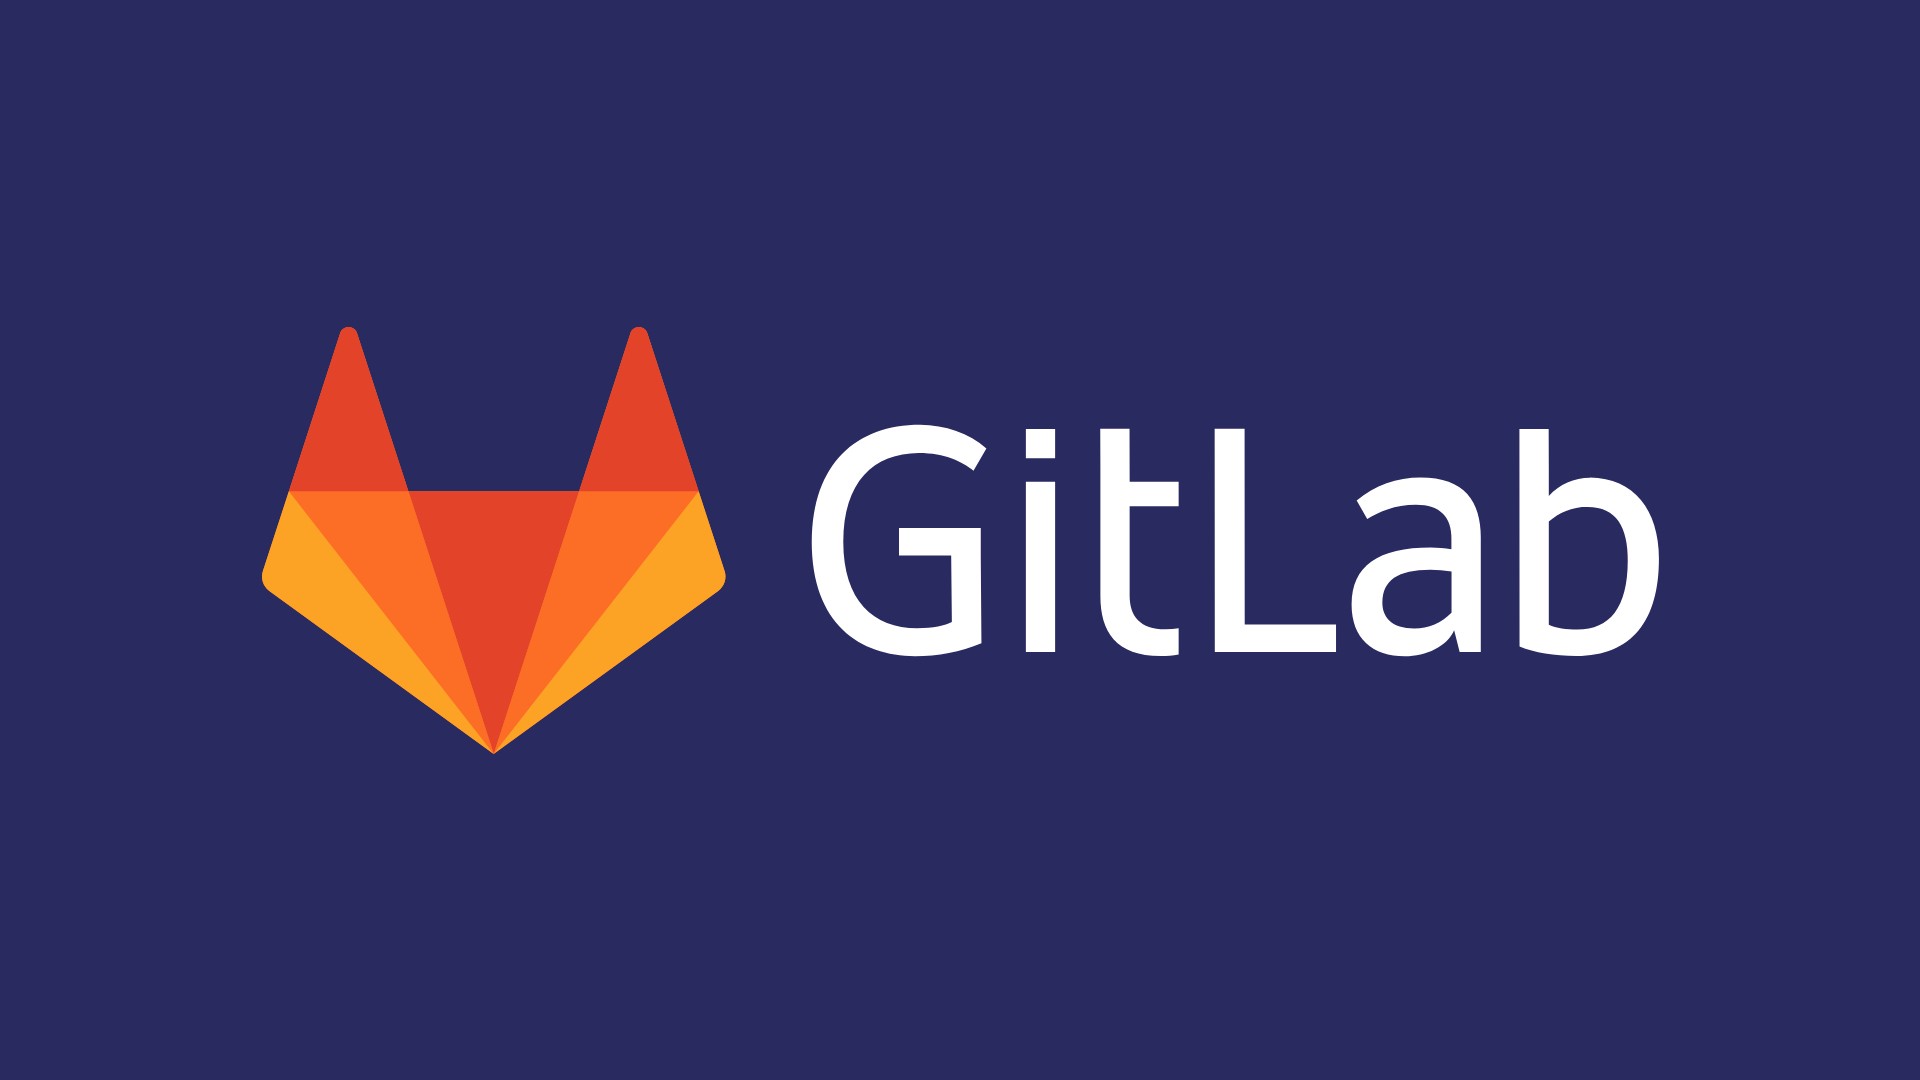 Gitlab logo on purple background